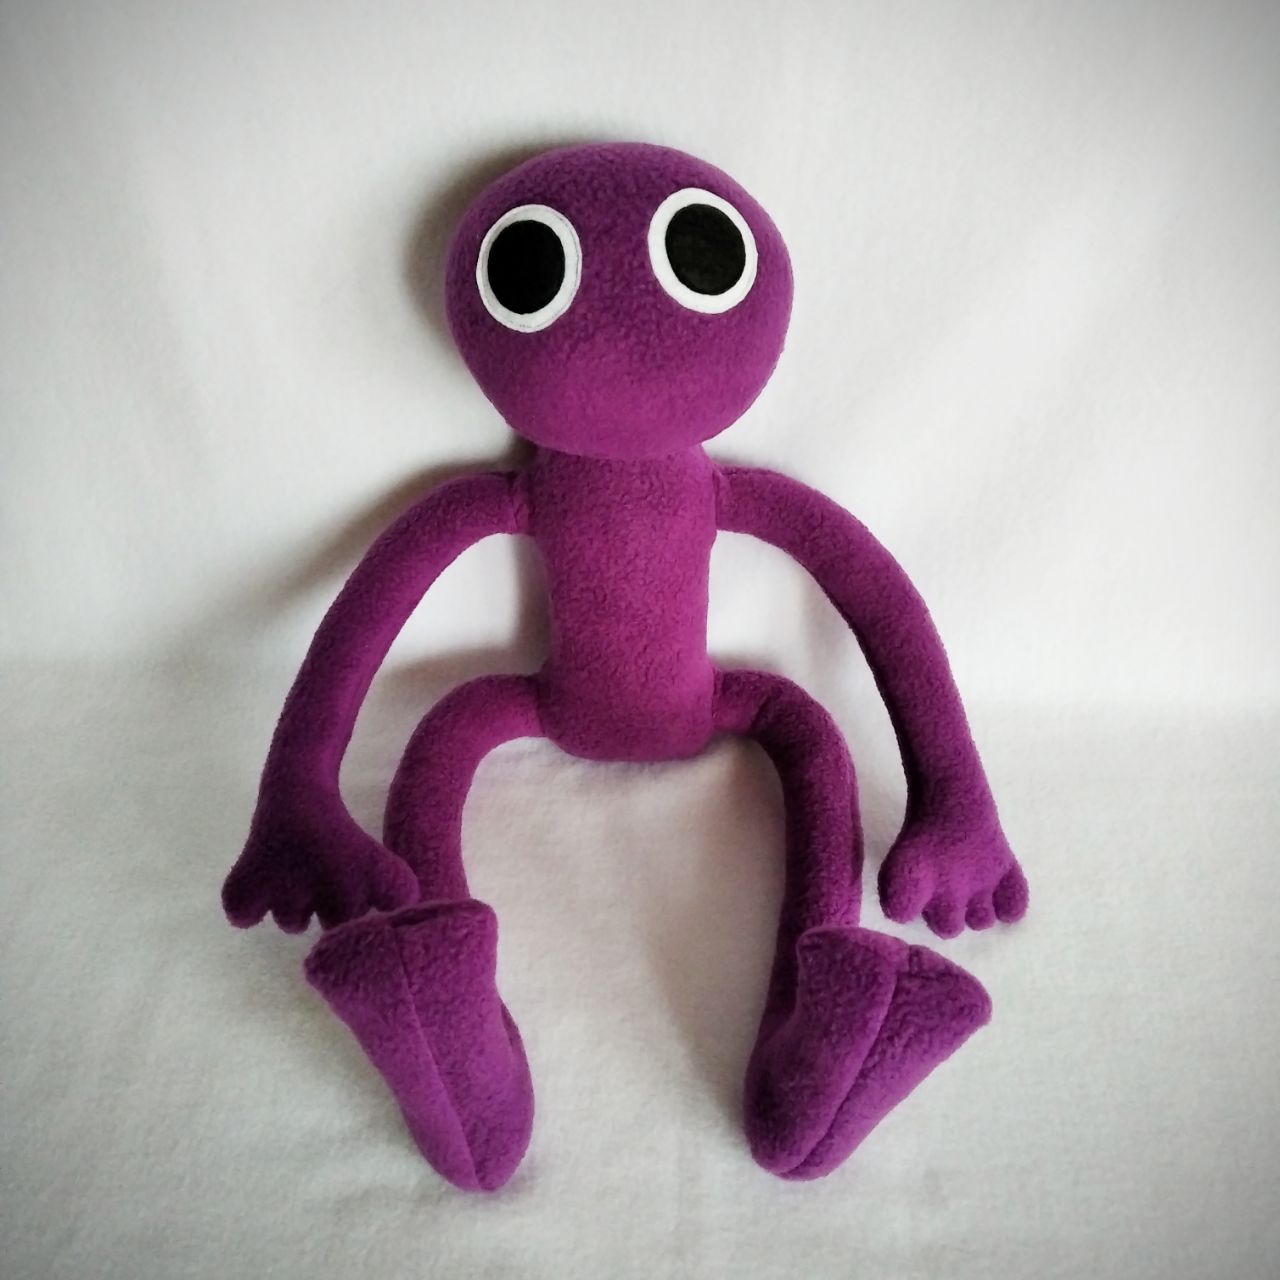 Ravelry: Roblox Rainbow Friends Purple doll pattern by nim nim